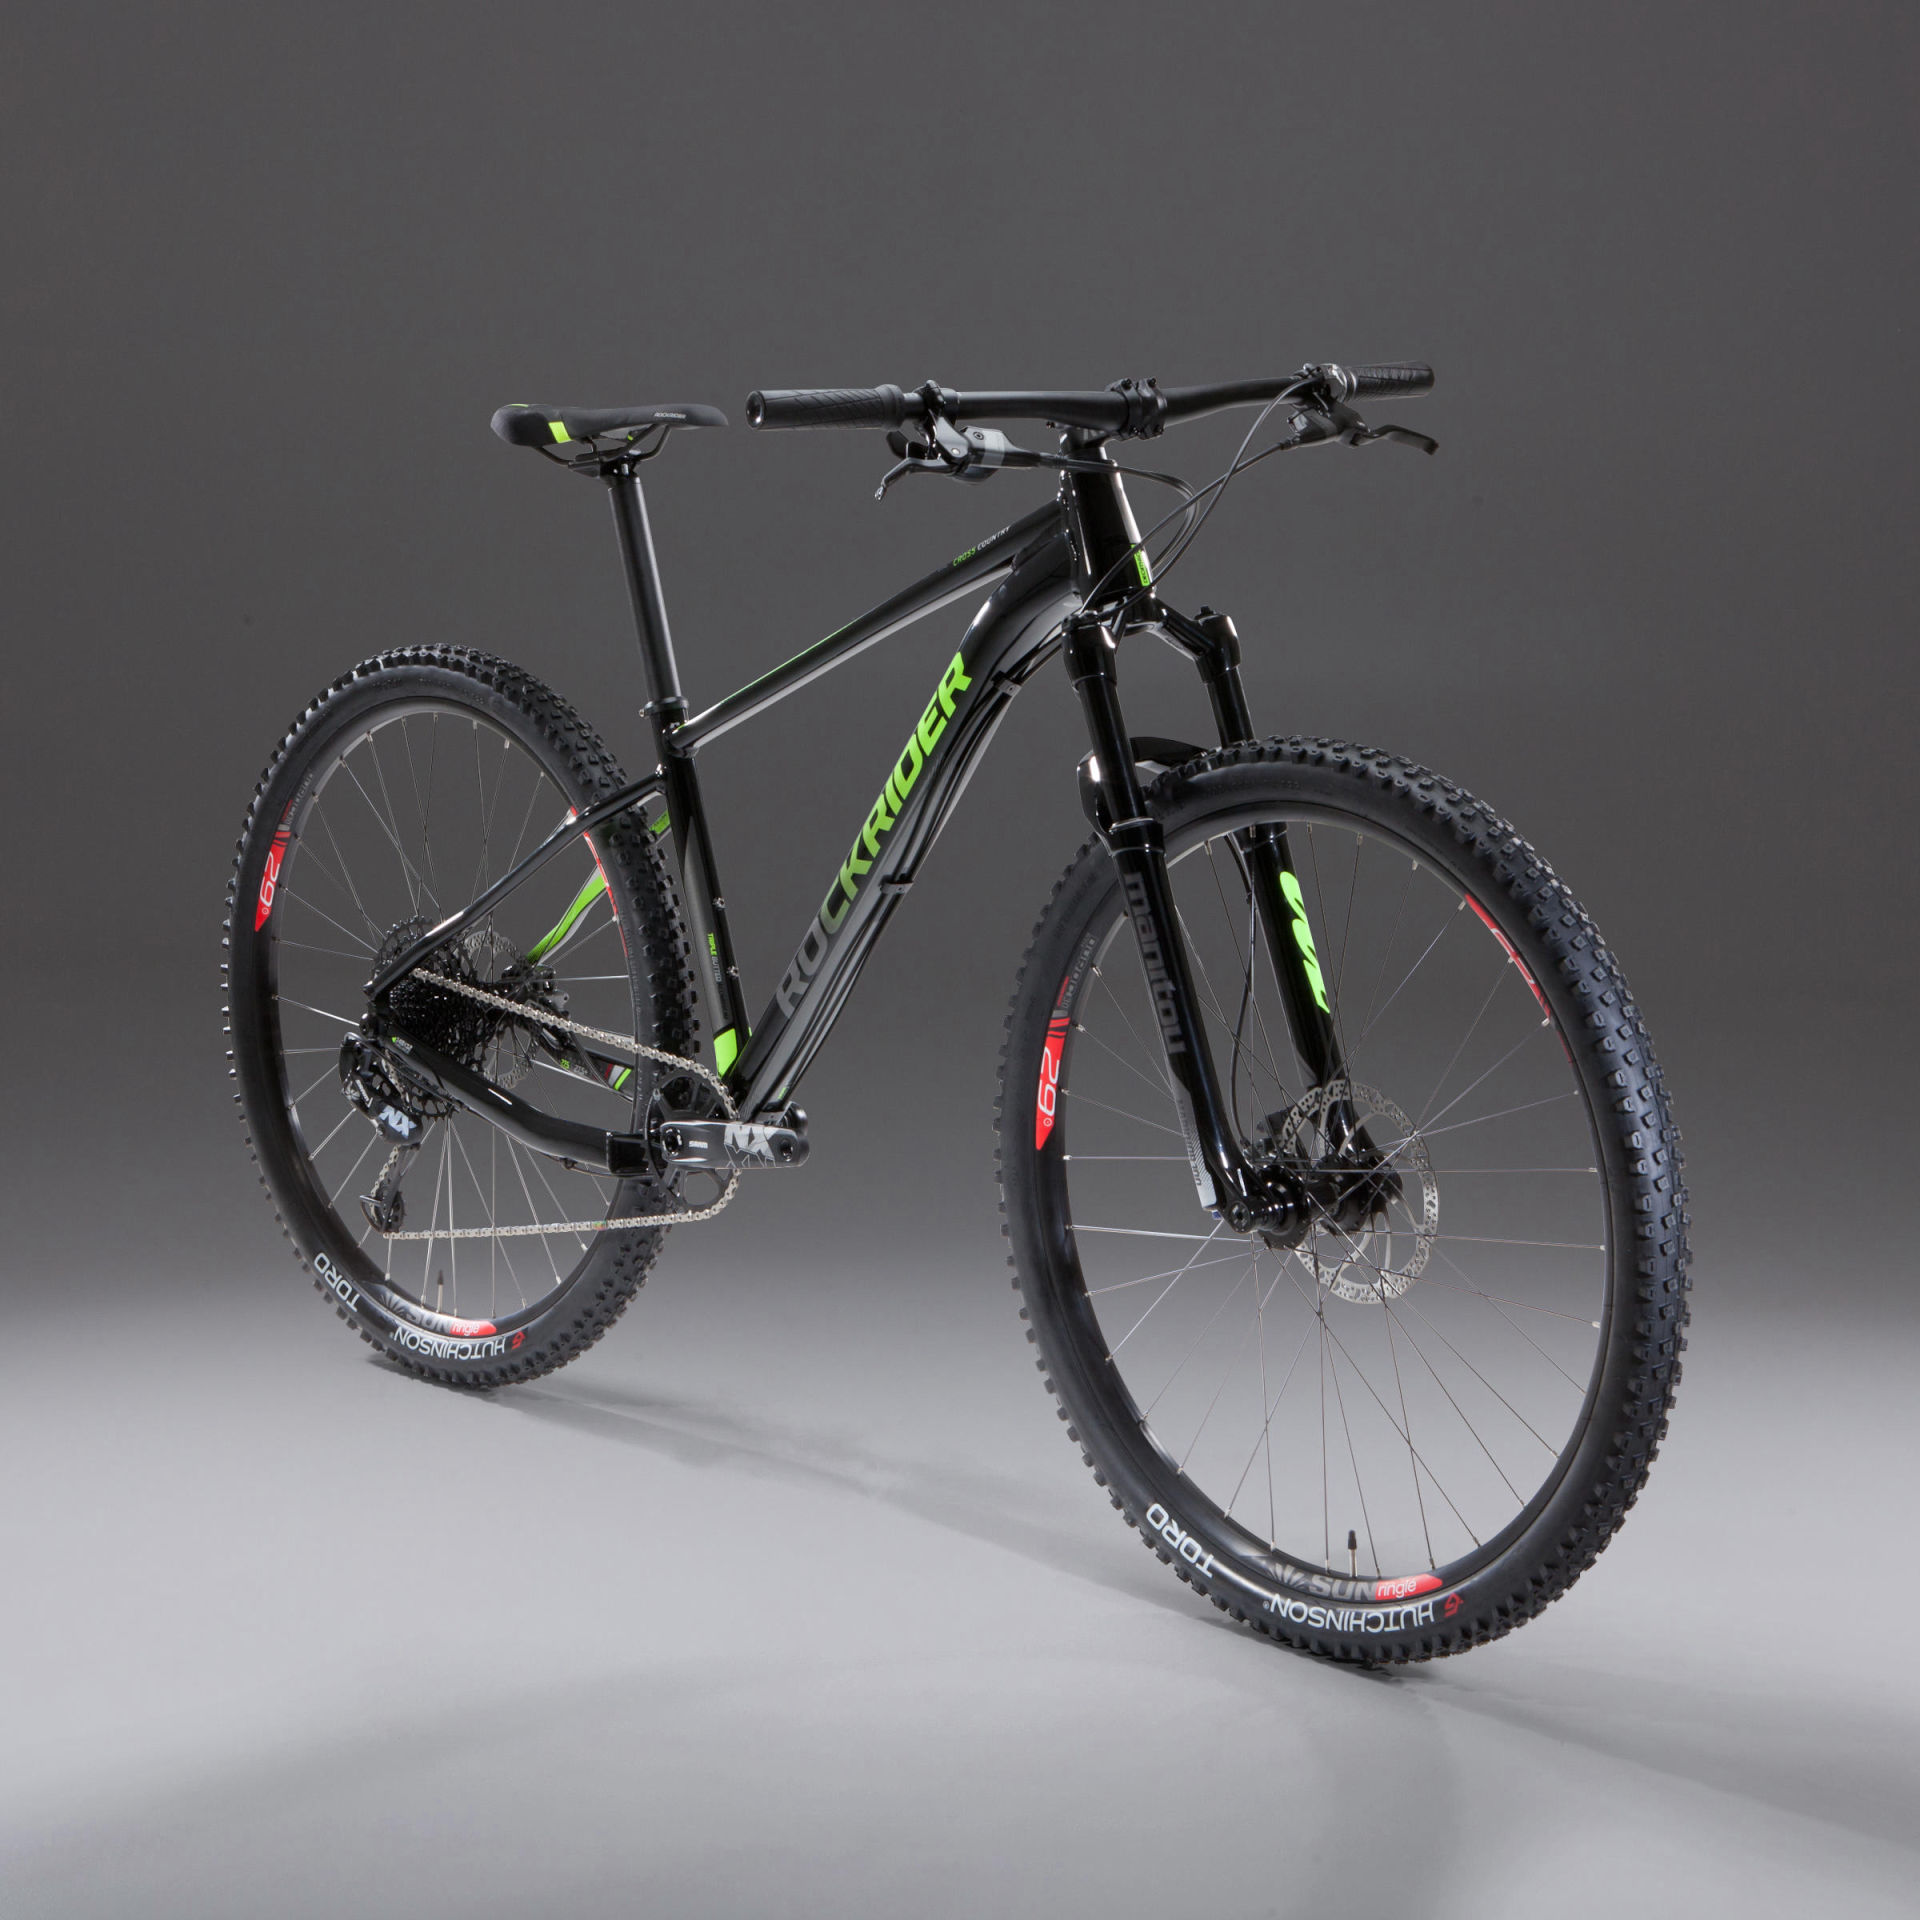 Rockrider XC 100 (2020) - Cross country (XC) bike